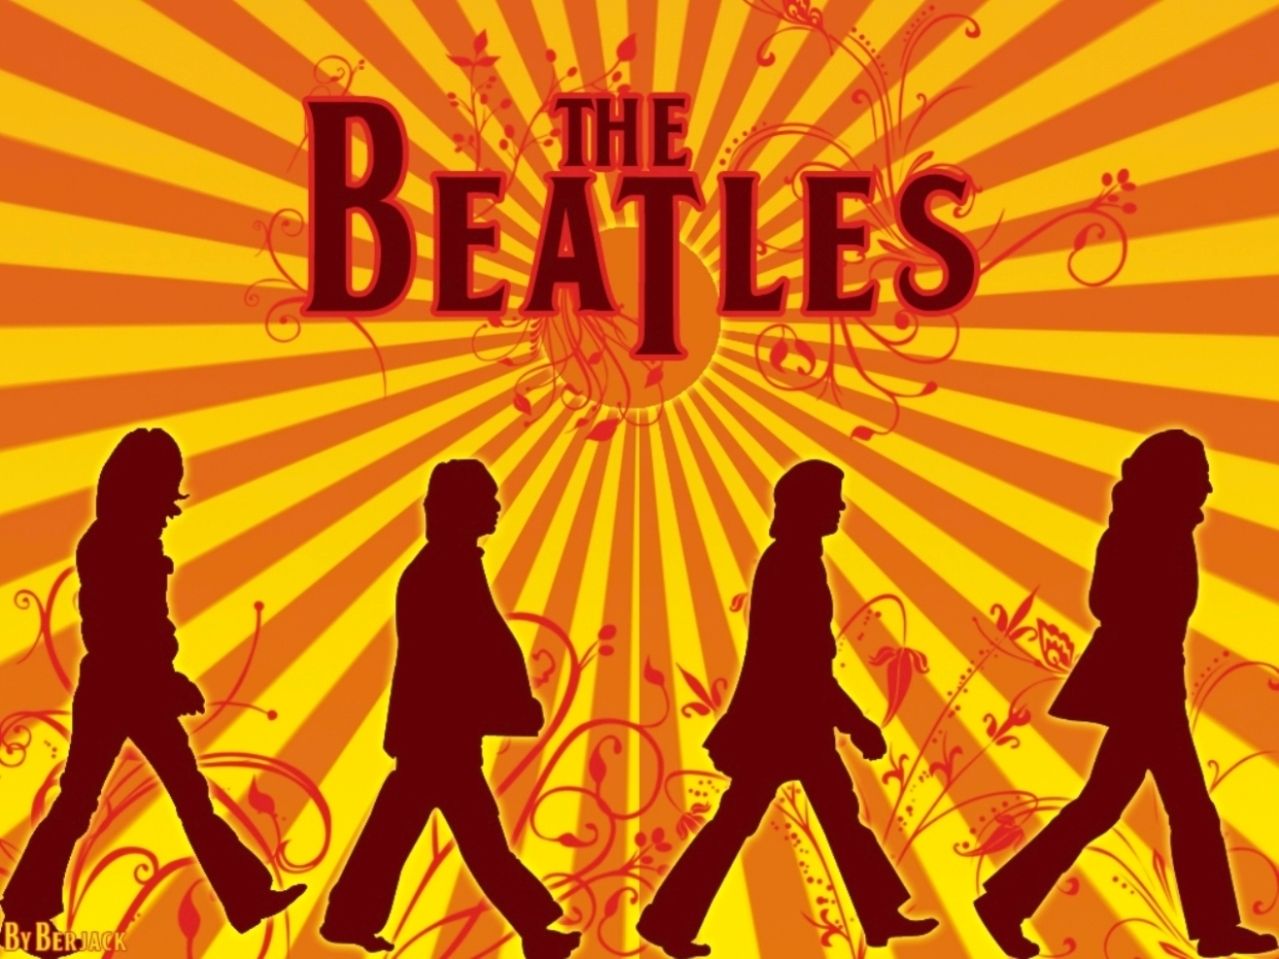 The Beatles - Here Comes the Sun. Beatles art, The beatles, Beatles wallpaper